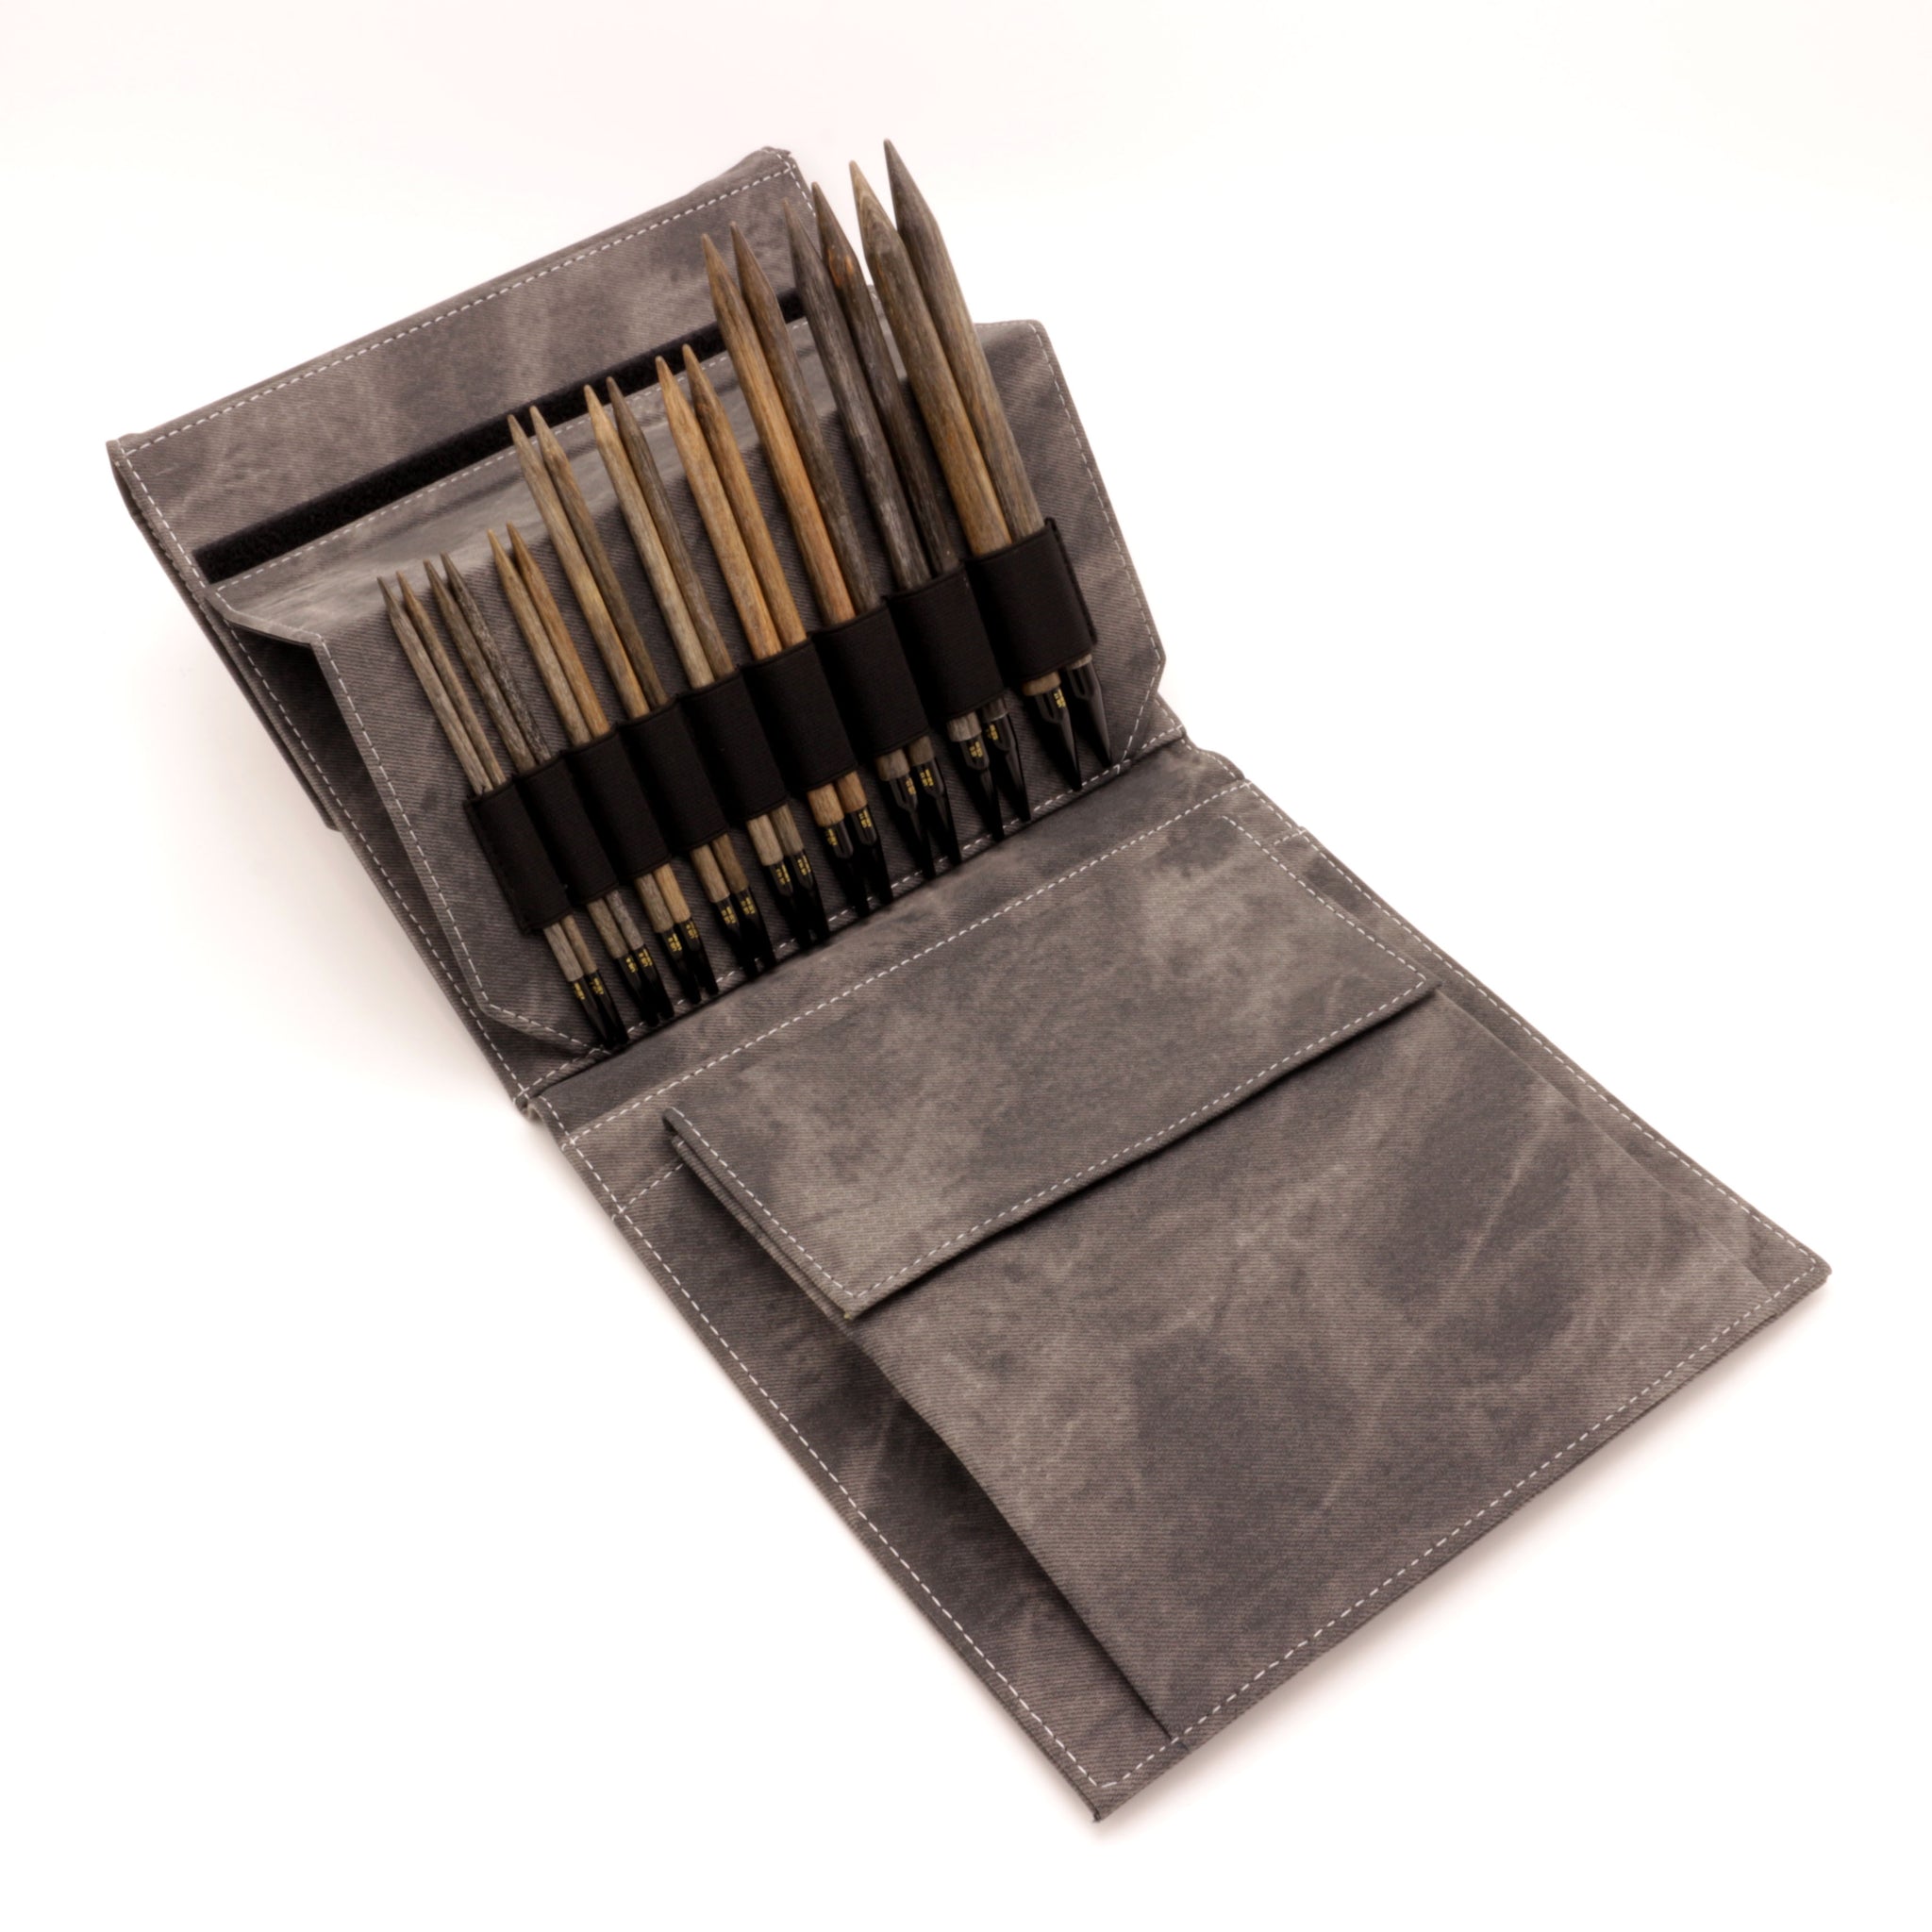 Lykke Driftwood 10 Inch Straight Knittng Needles - US 7 (4.5mm)